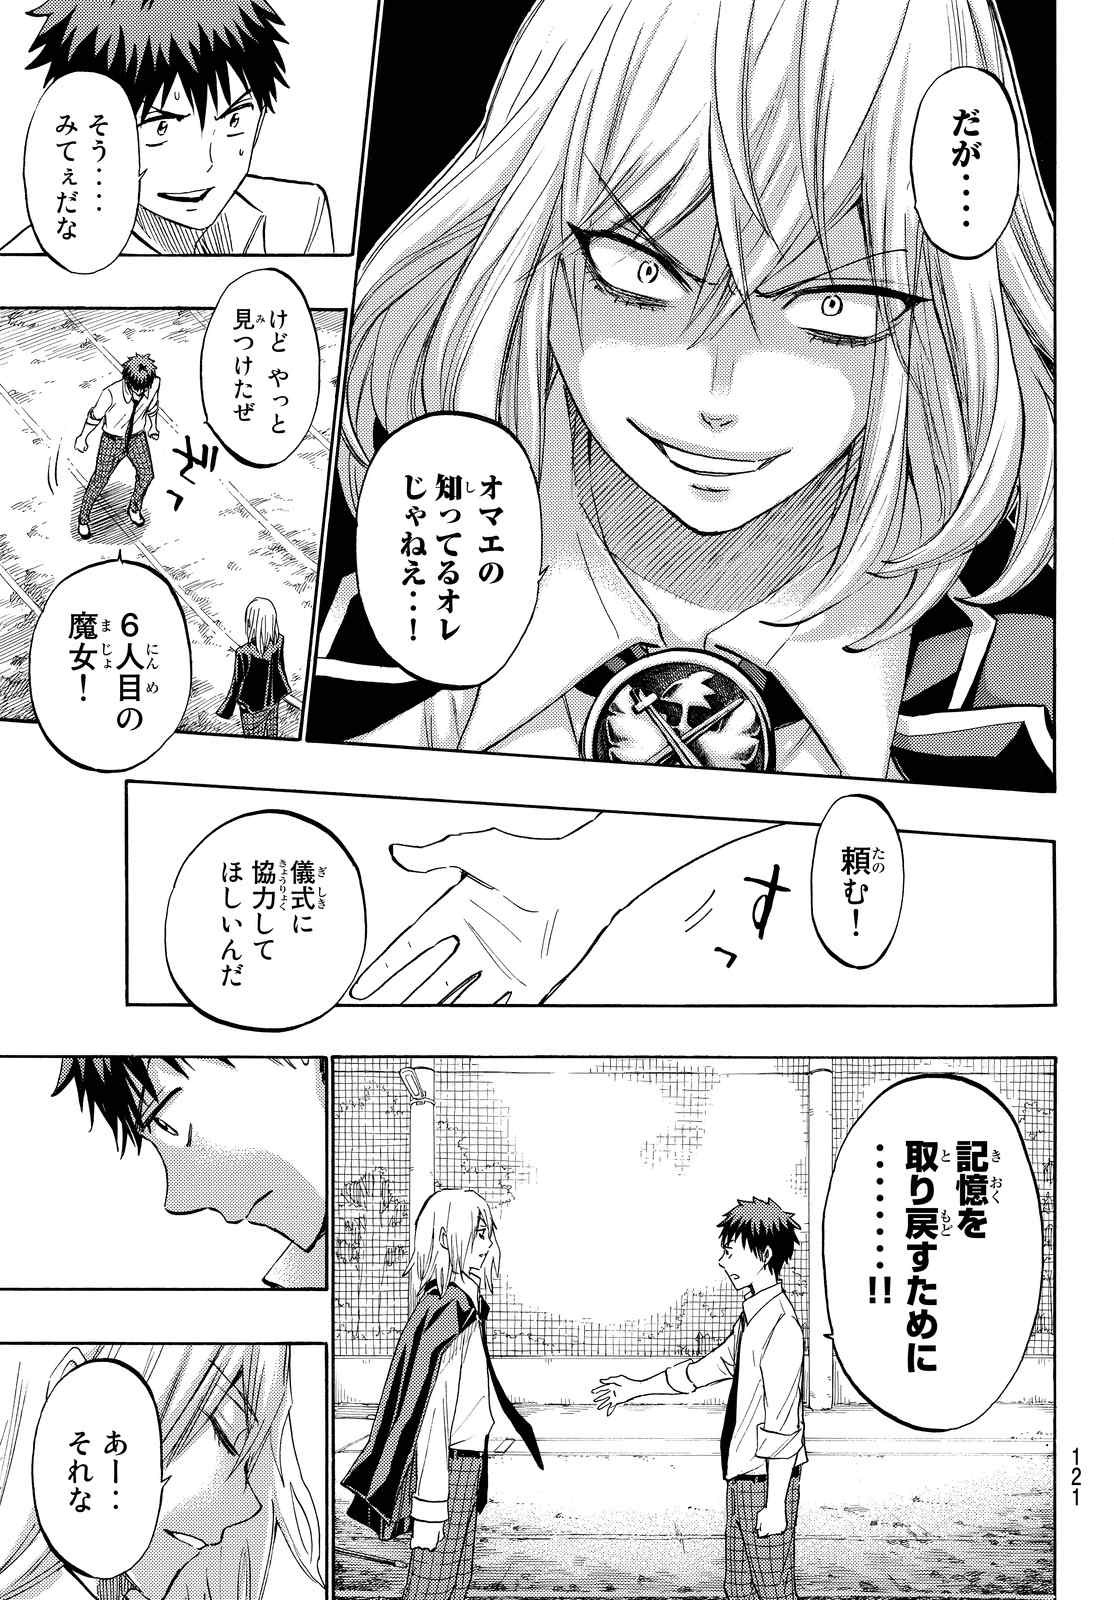 Yamada-kun to 7-nin no Majo - Chapter 221 - Page 3